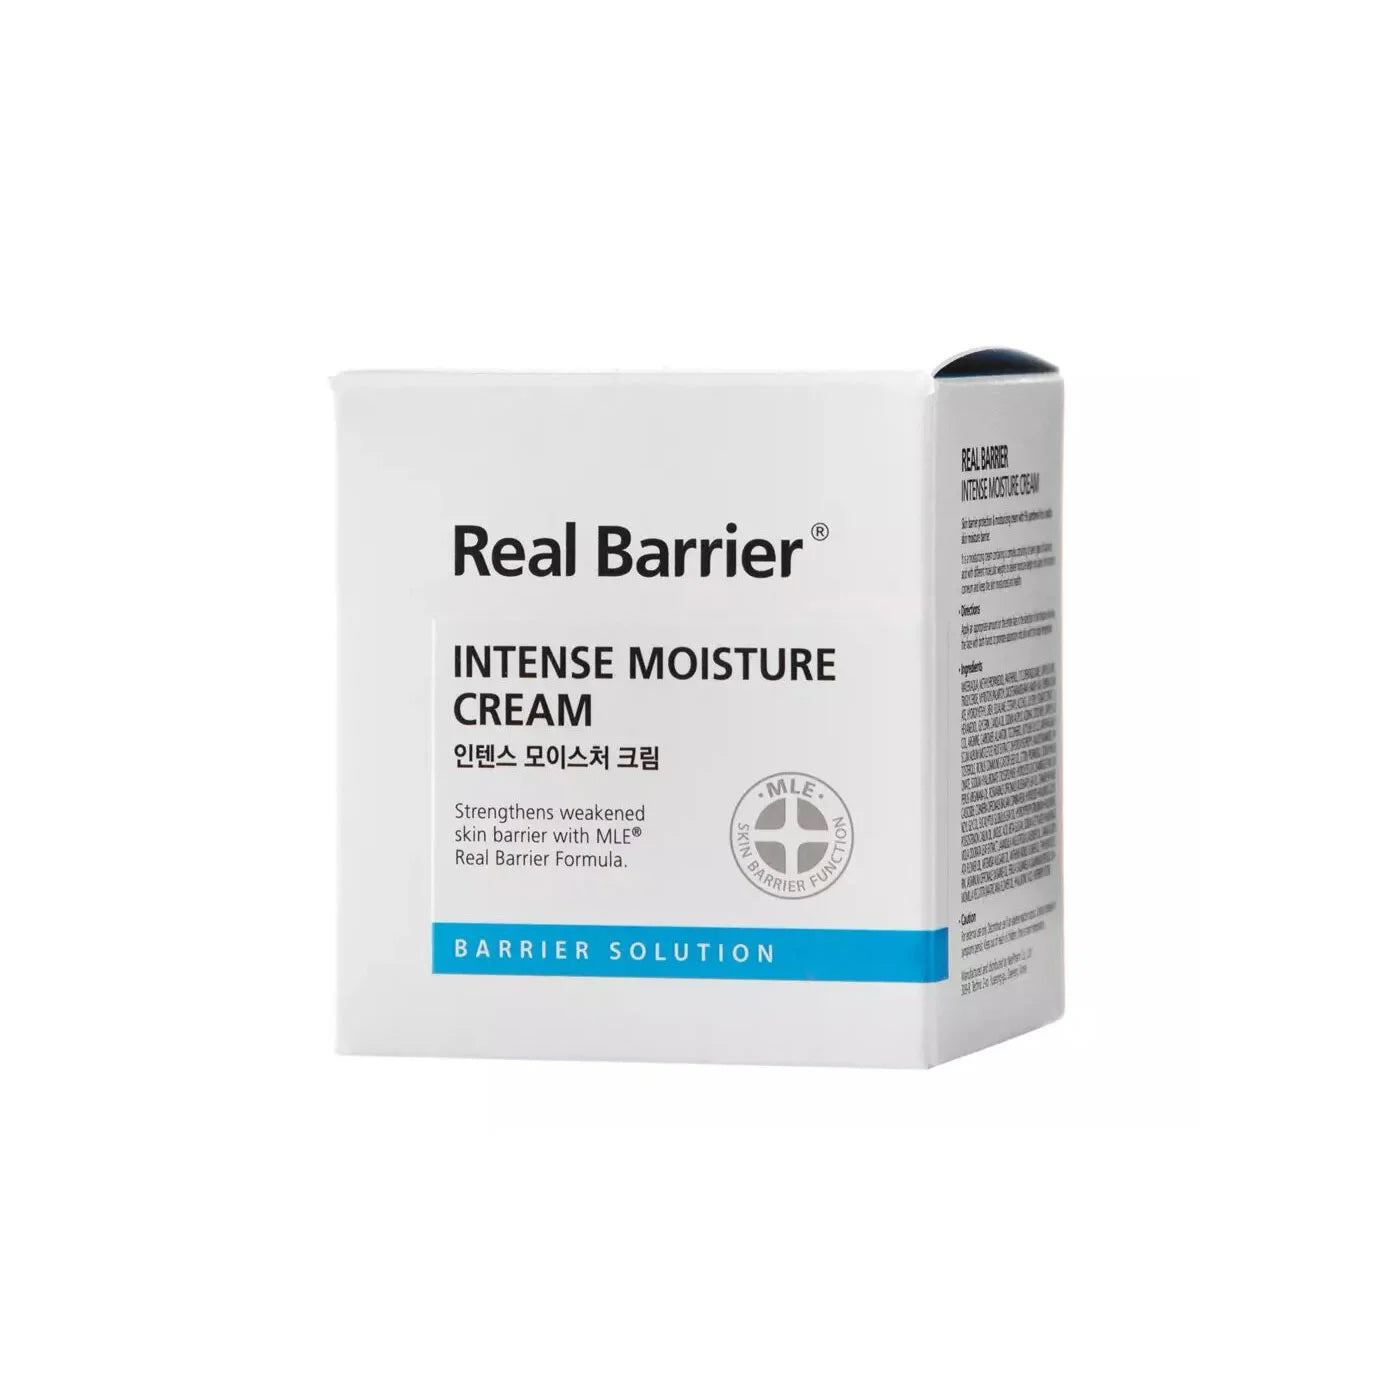 Real Barrier Intense Moisture Cream best facial moisturizer for dry cold winter Korean skin care sensitive rough mature skin K Beauty World